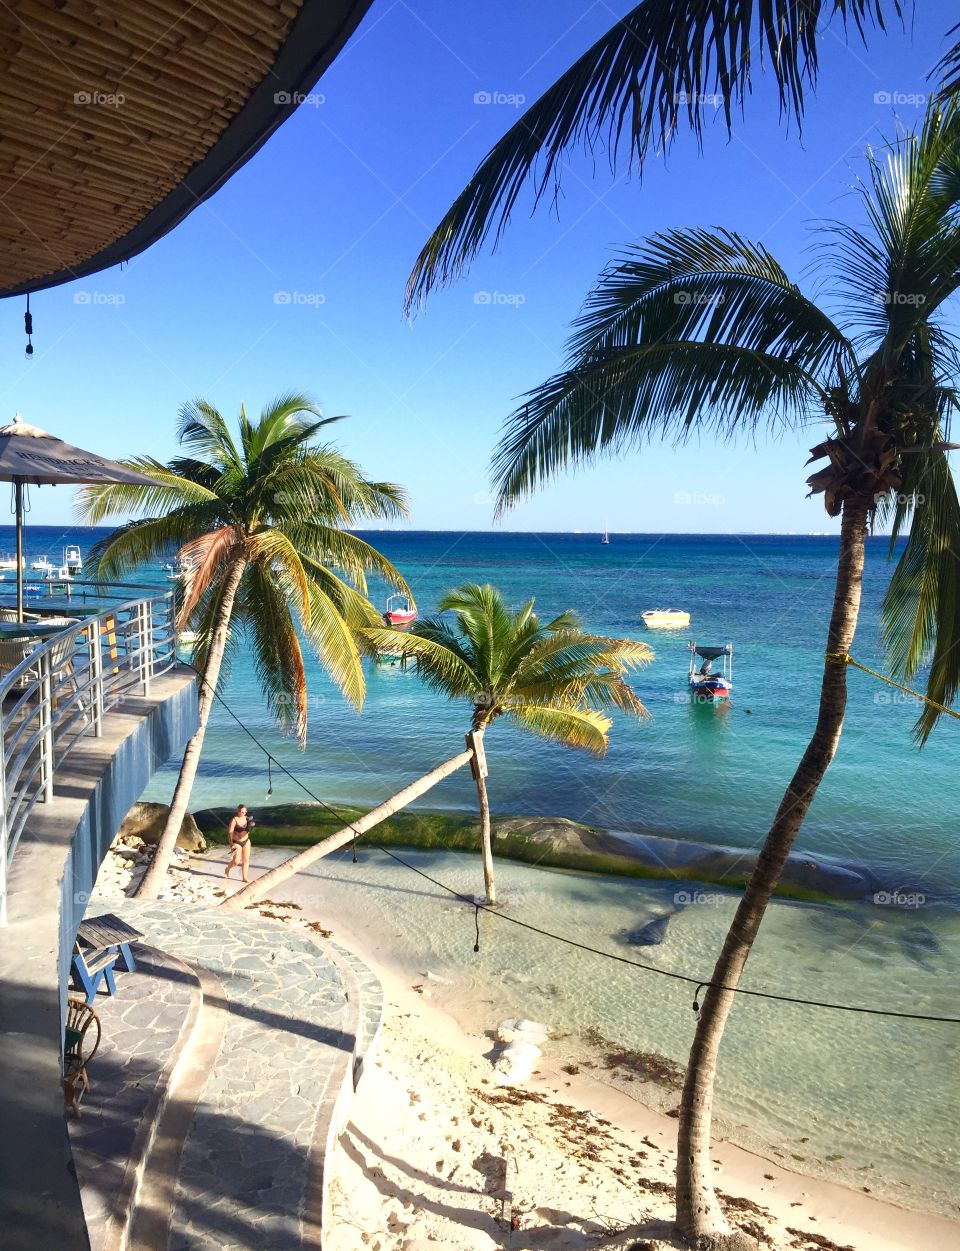 Restaurant by the beach, palm trees, yachts, Mexico coast